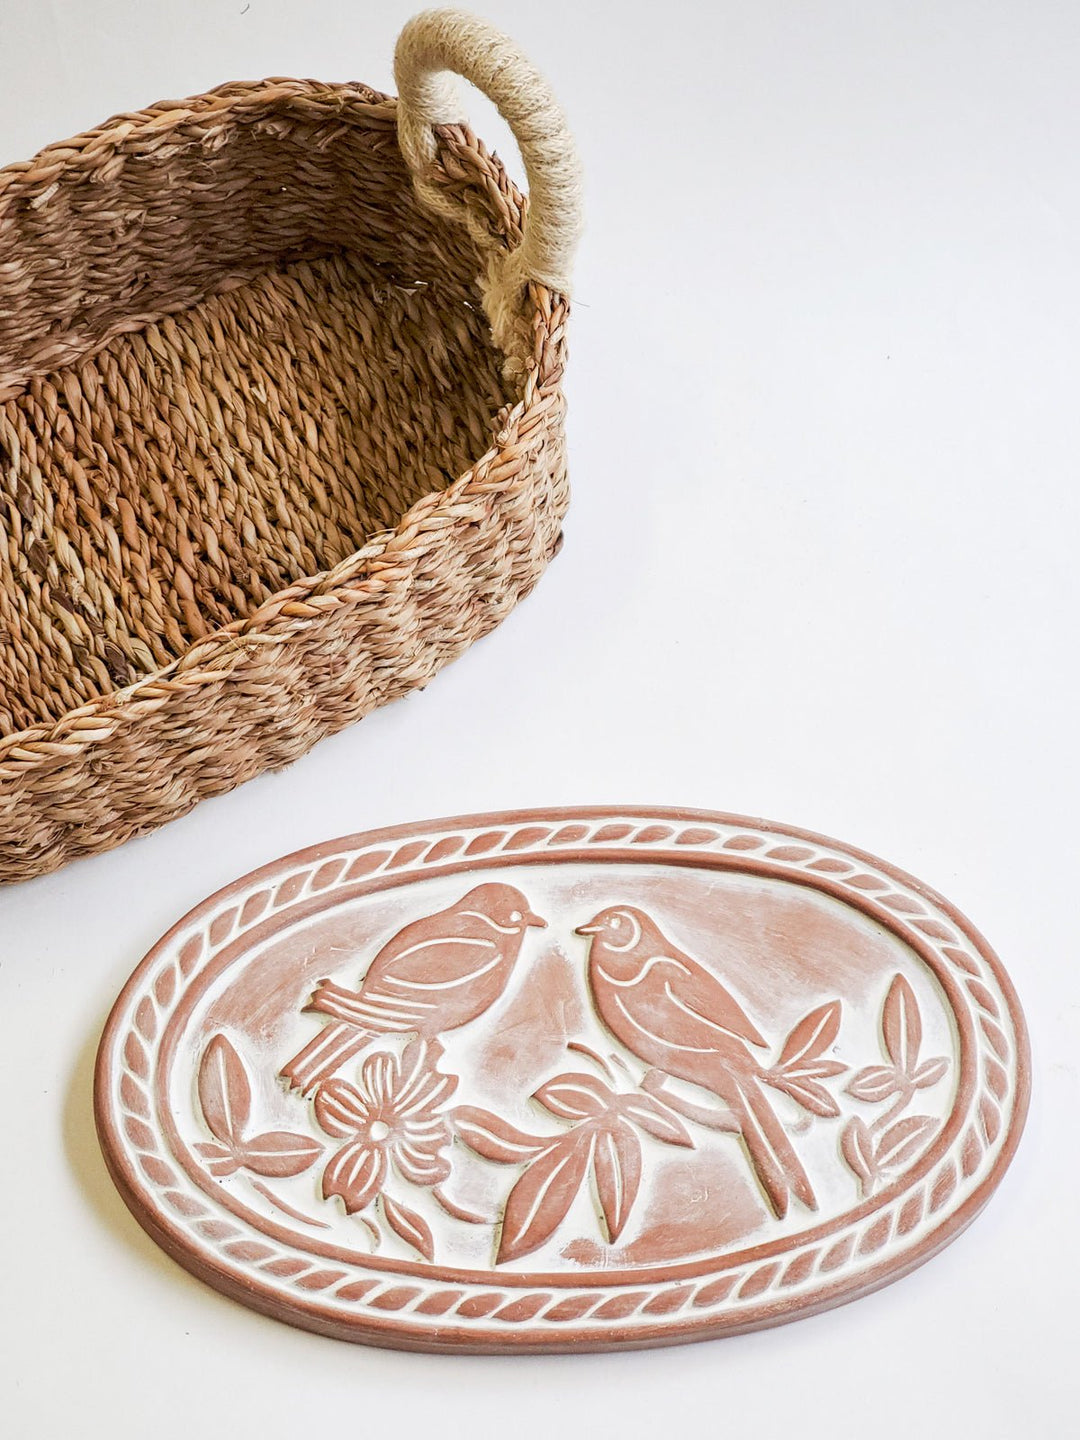 Bread Warmer & Basket Gift Set with Tea Towel - Lovebird Oval - EcofiedHome